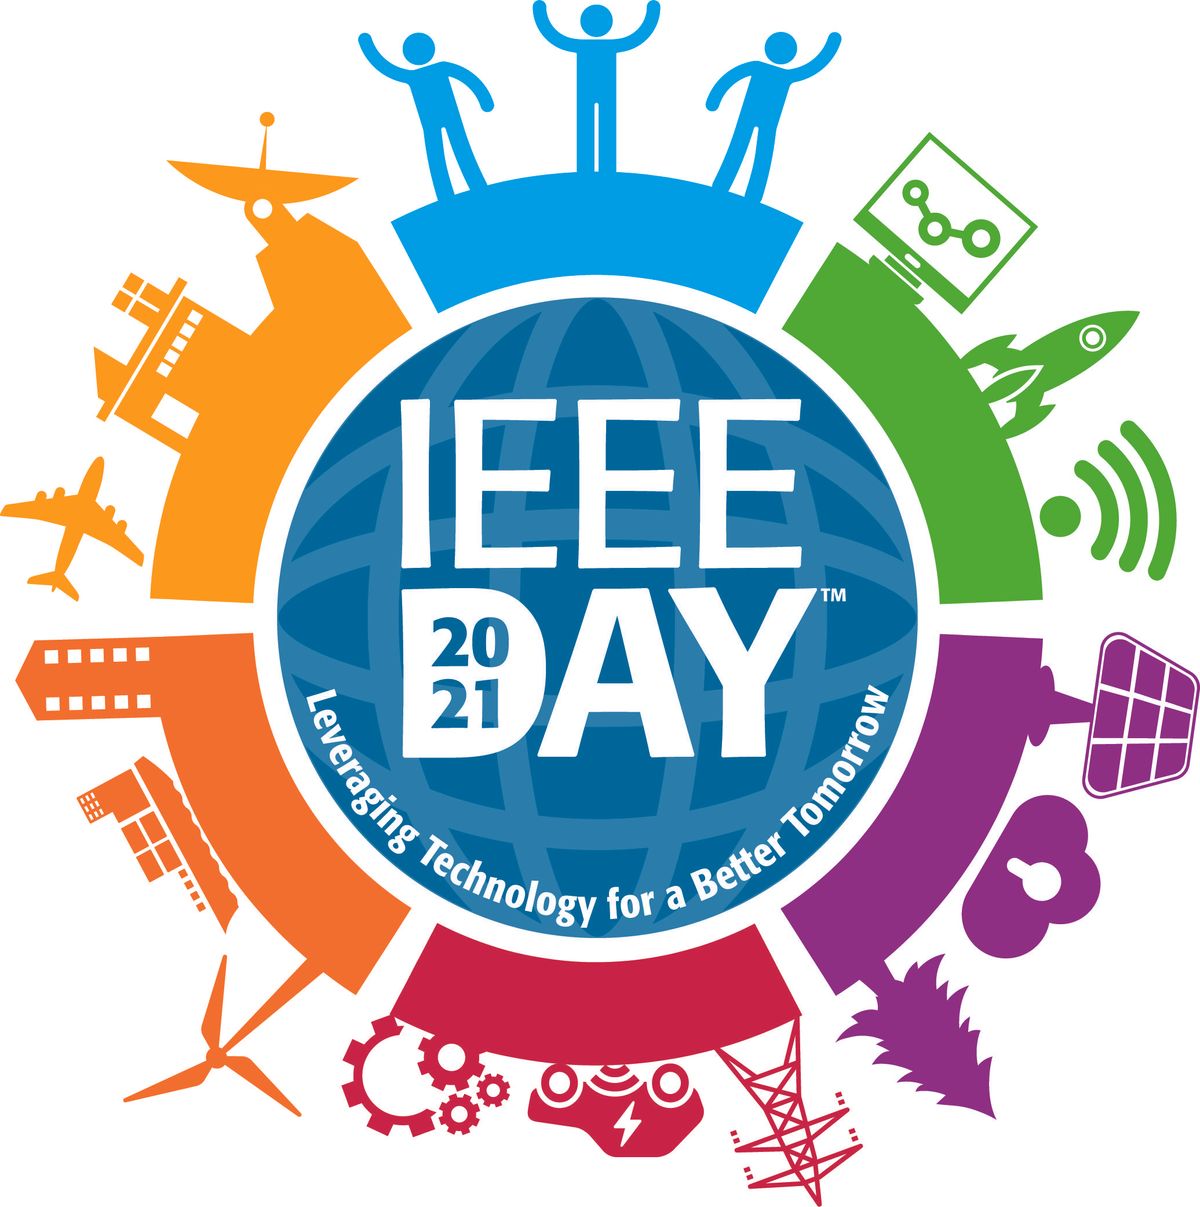 IEEE Day 2021 logo